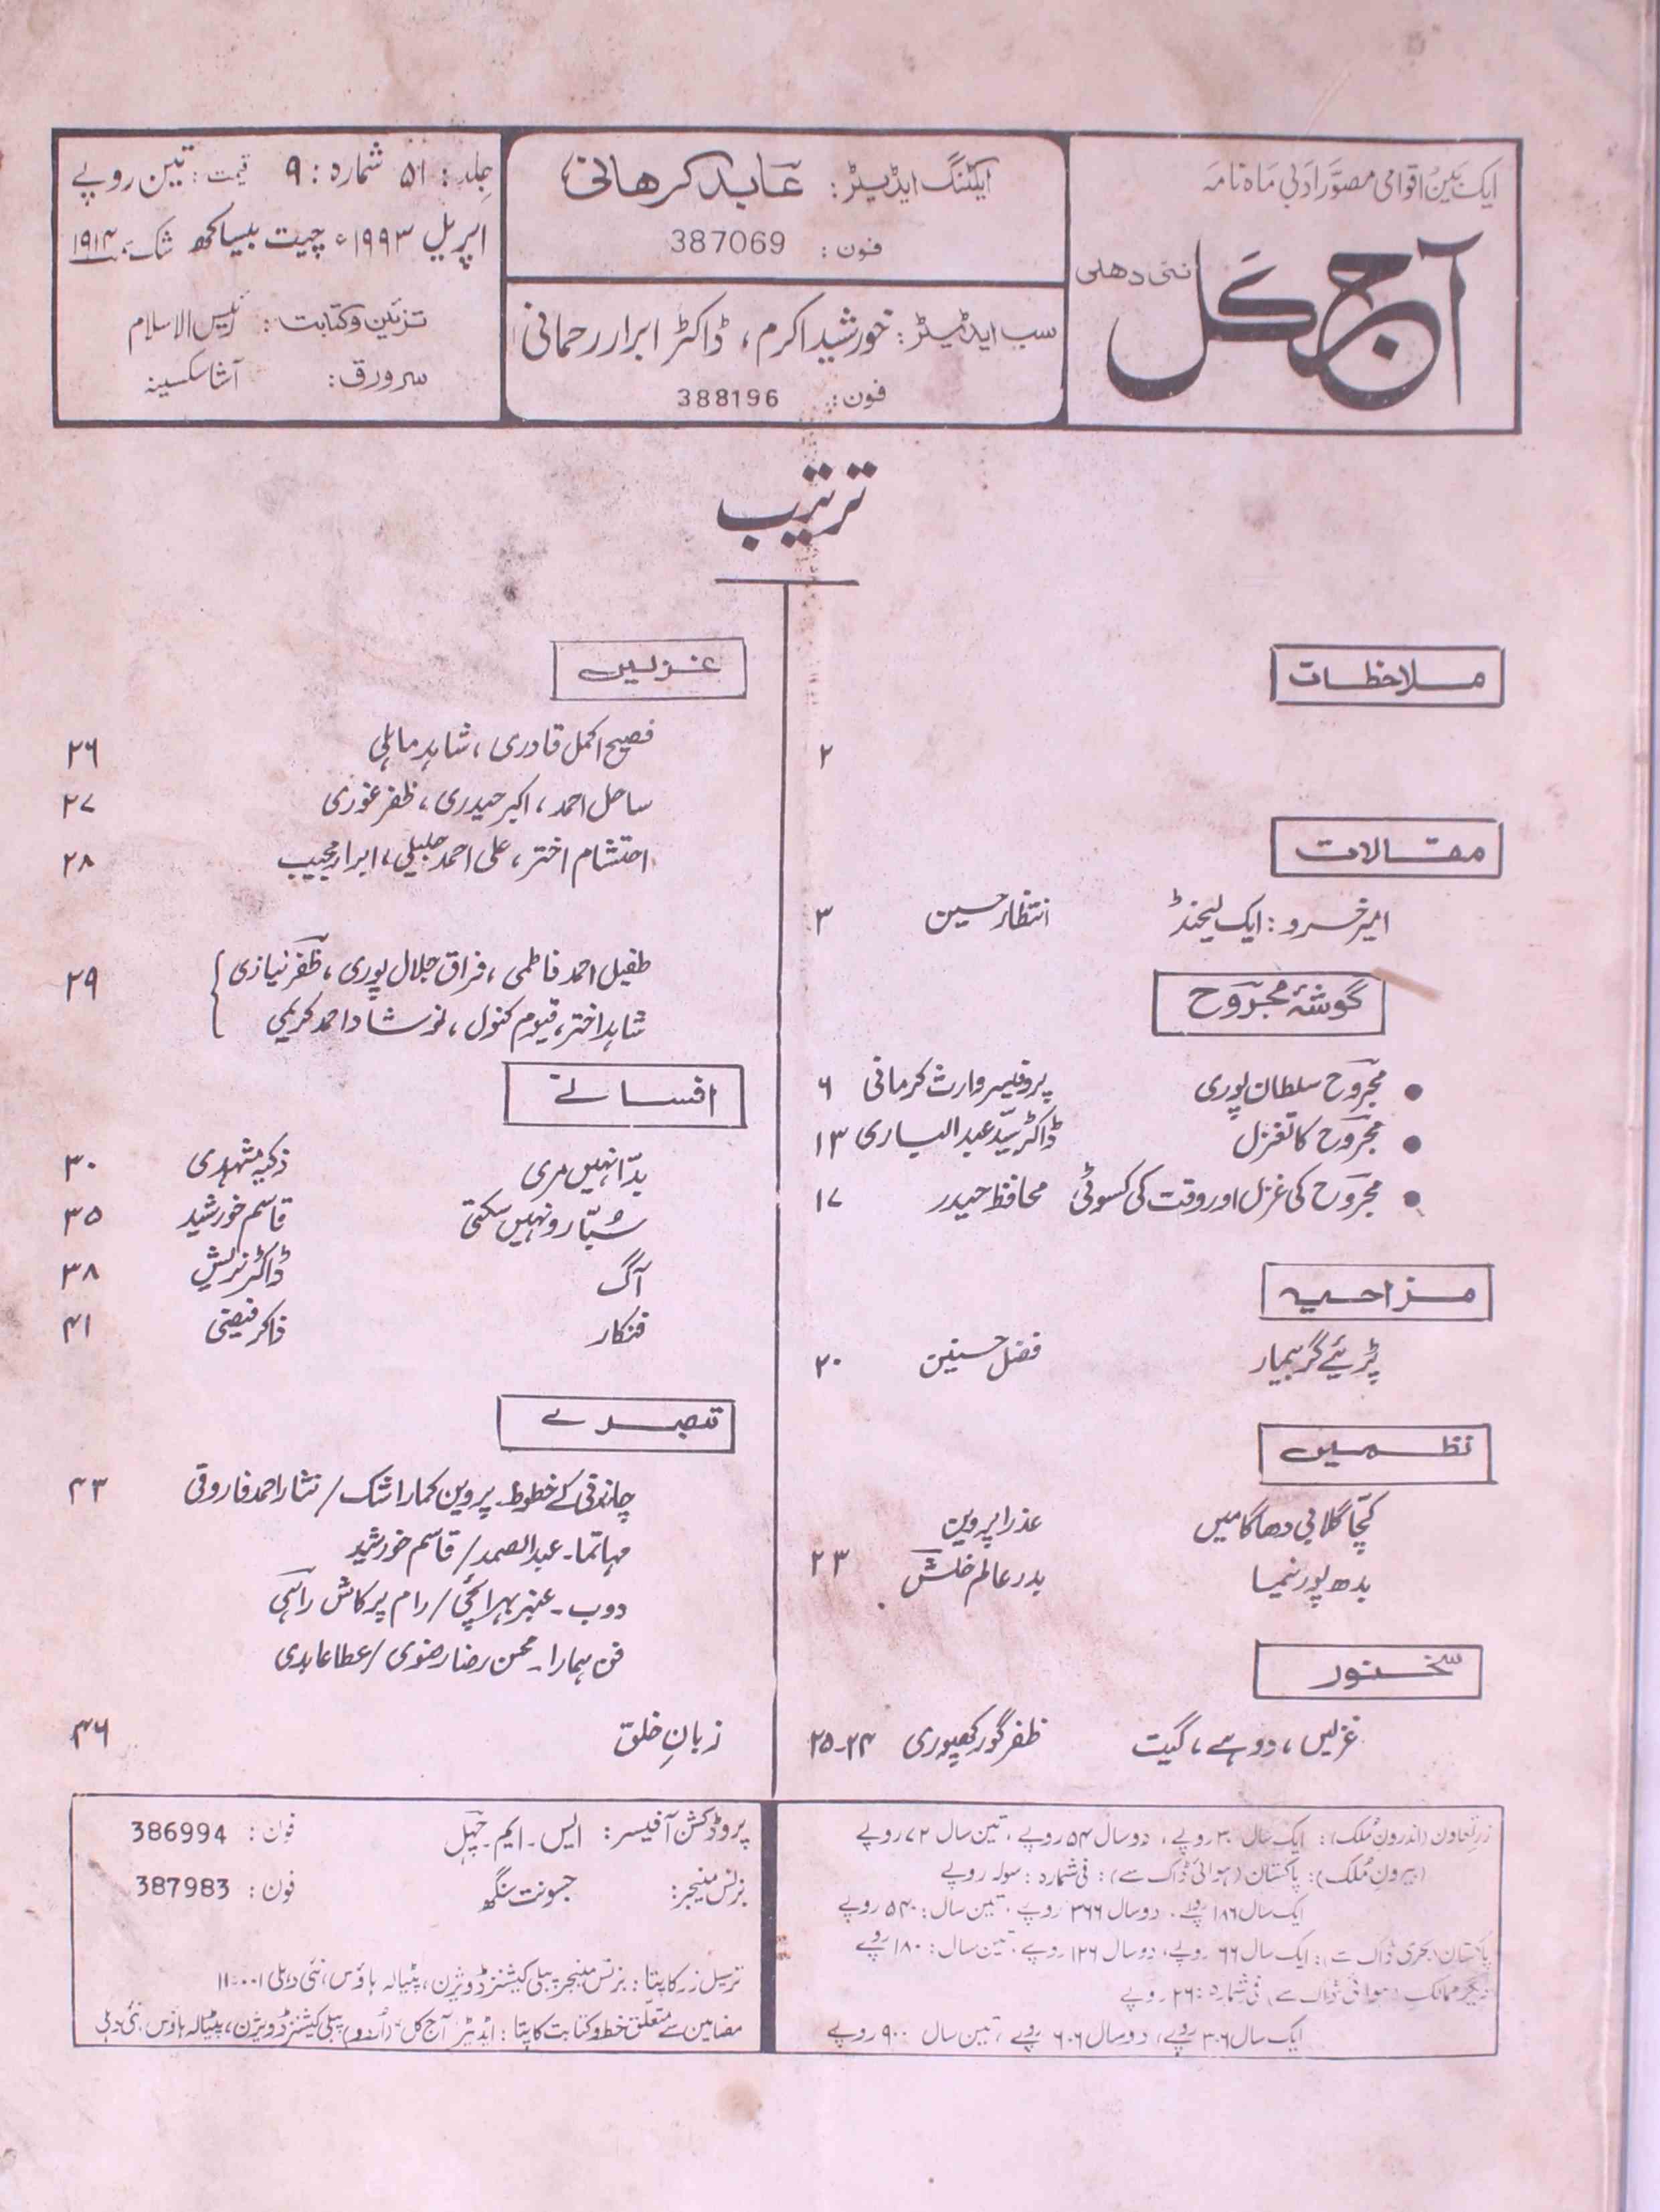 Aj Kal Jild 51 Shumara 9 April 1993-Shumara Number-009